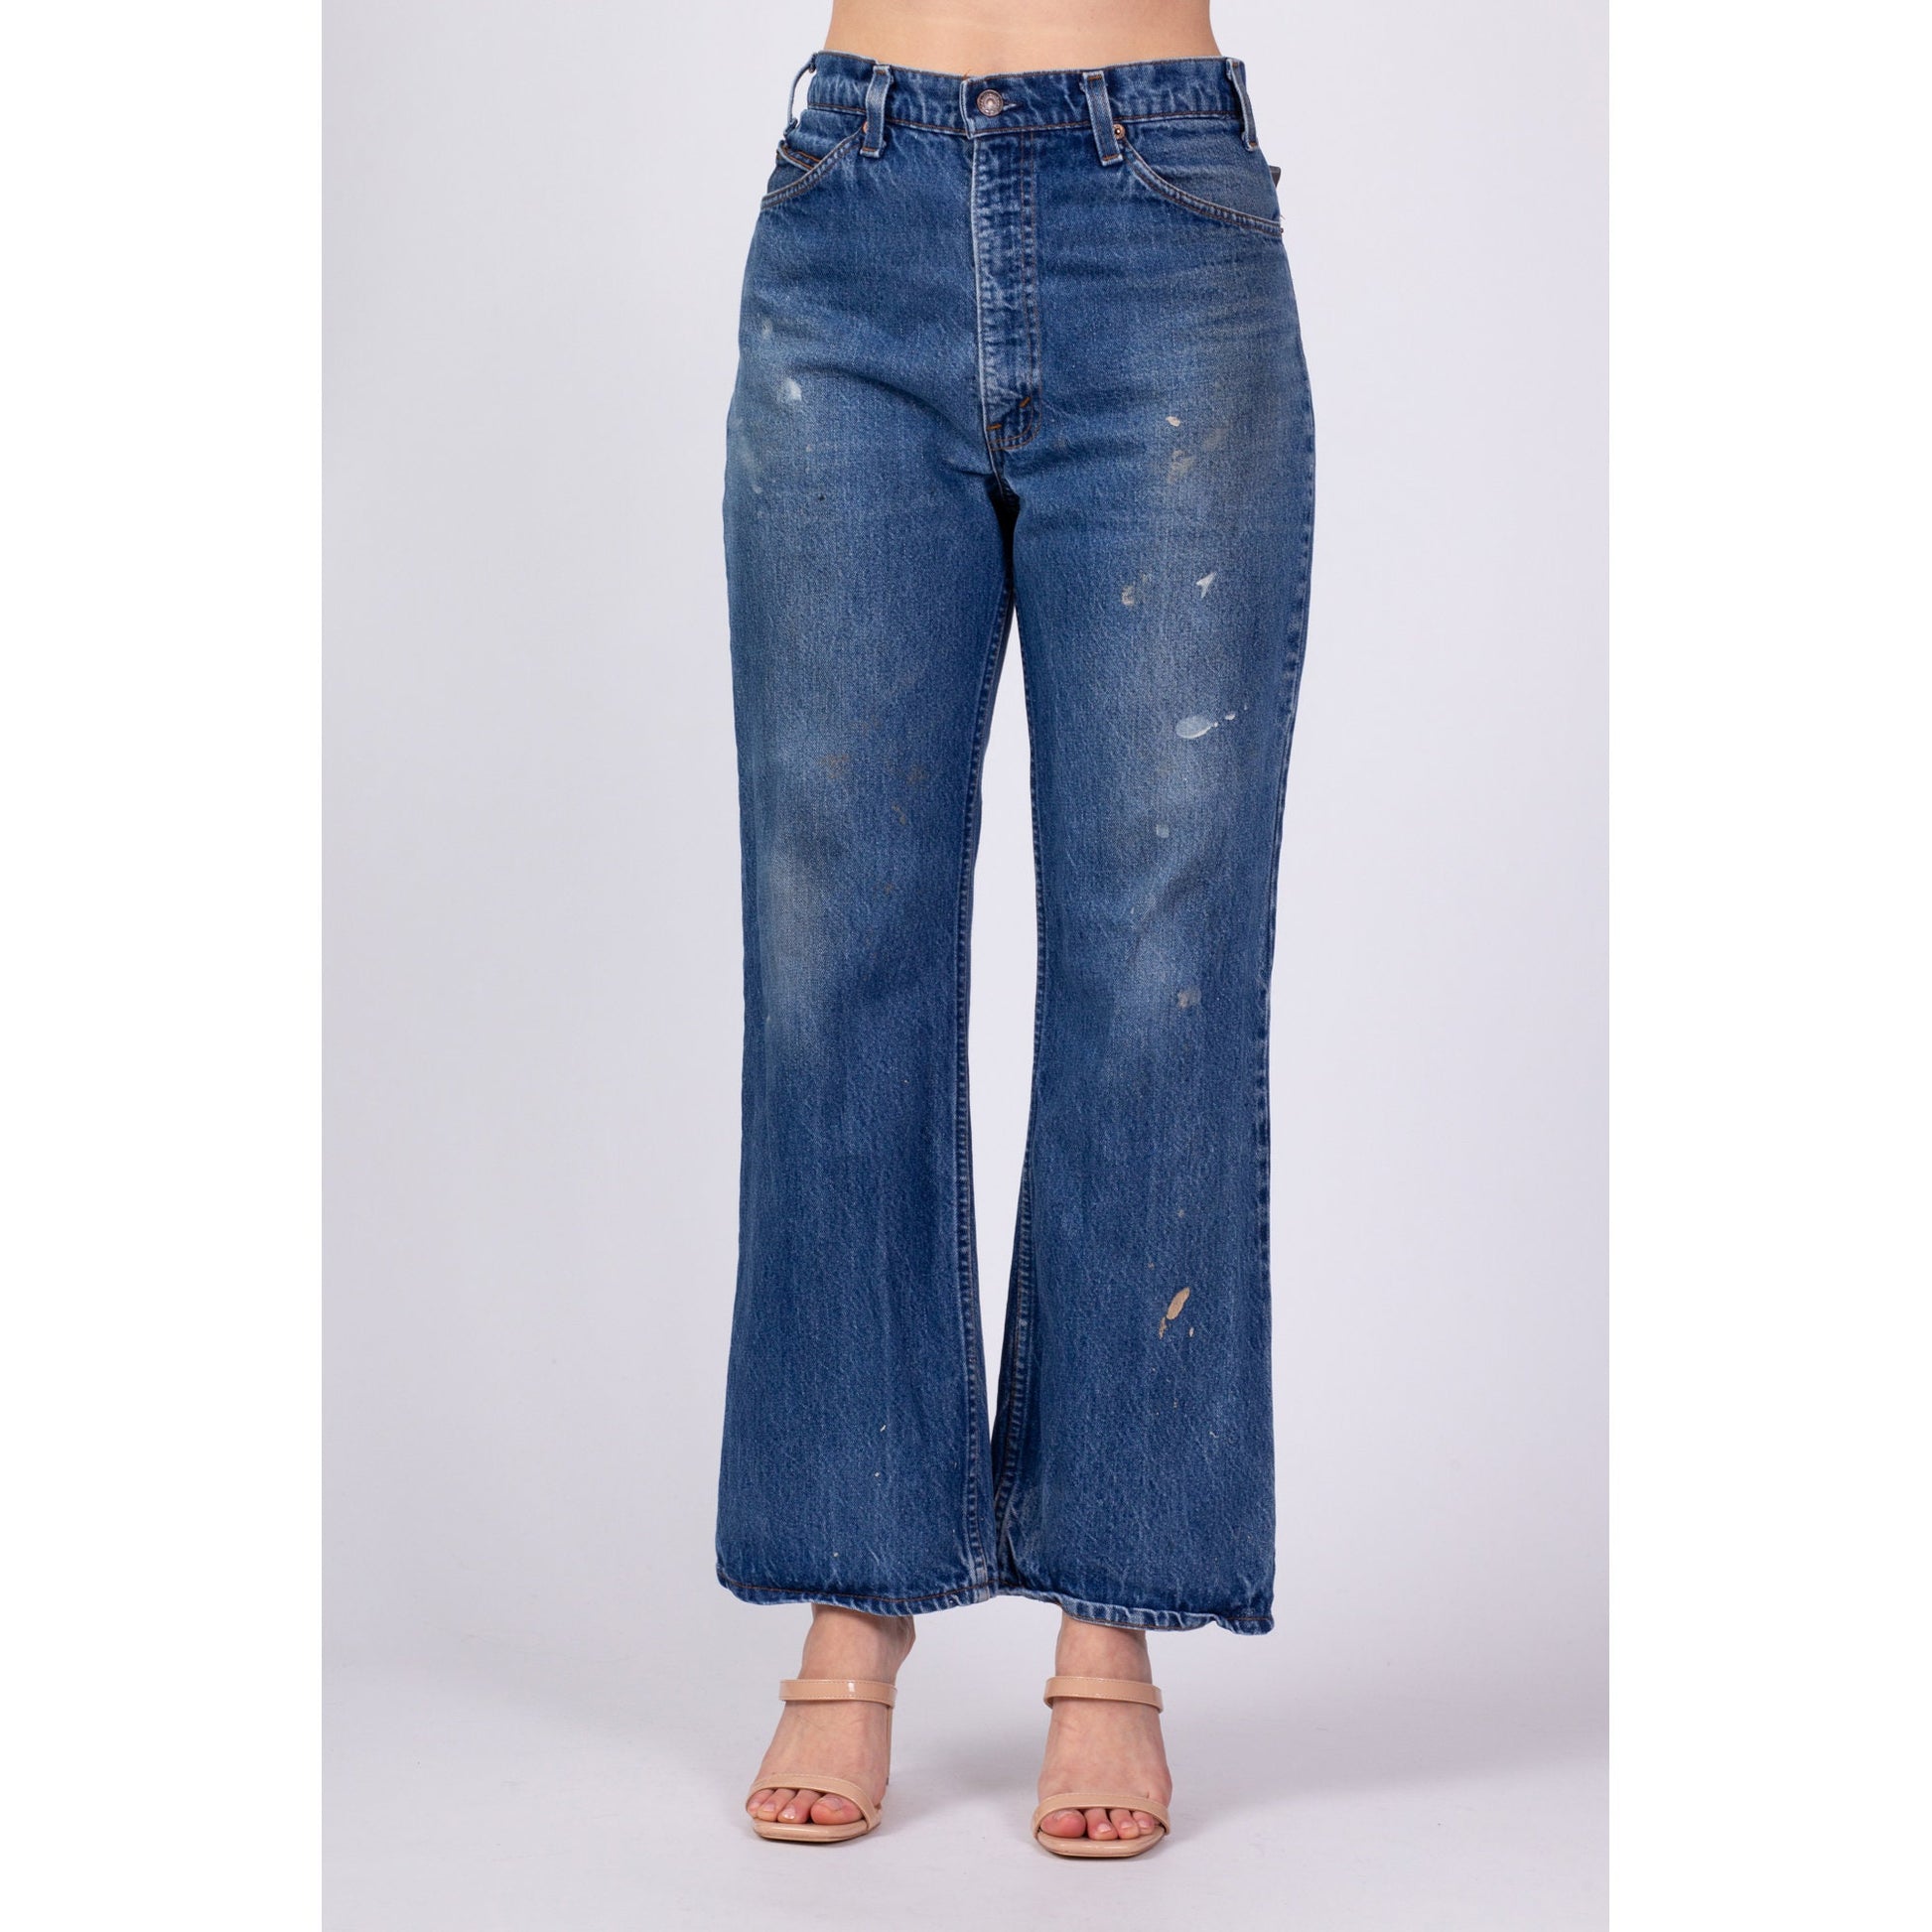 70s Vintage Western Jeans High Waisted Bootcut Leg Womens Size 8 Waist 31 